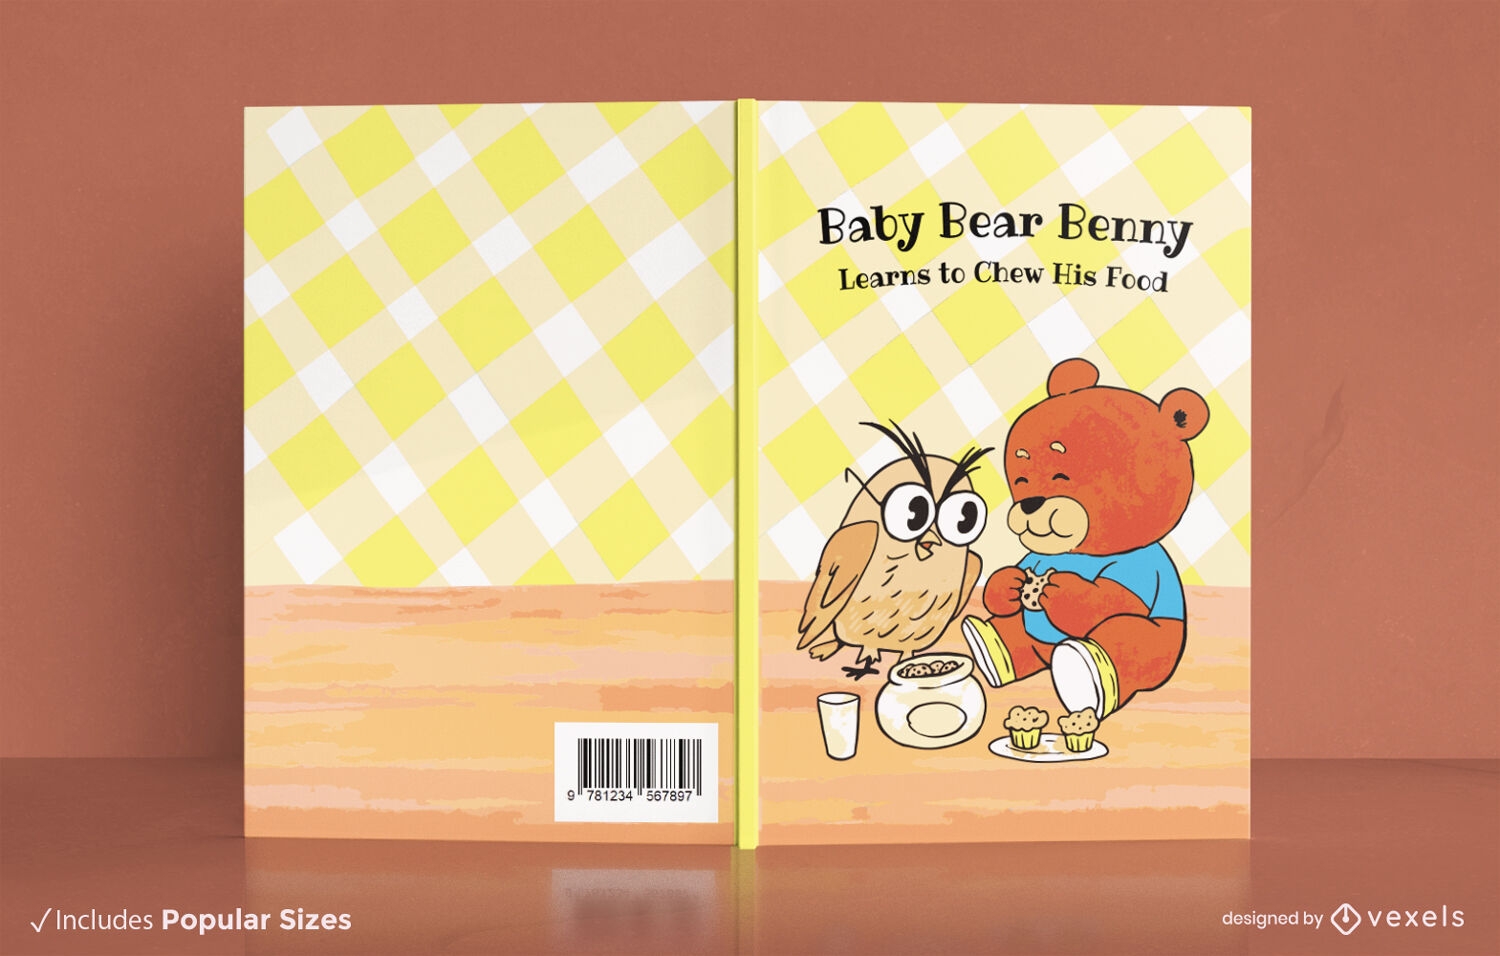 Bear and owl cartoon book cover design KDP